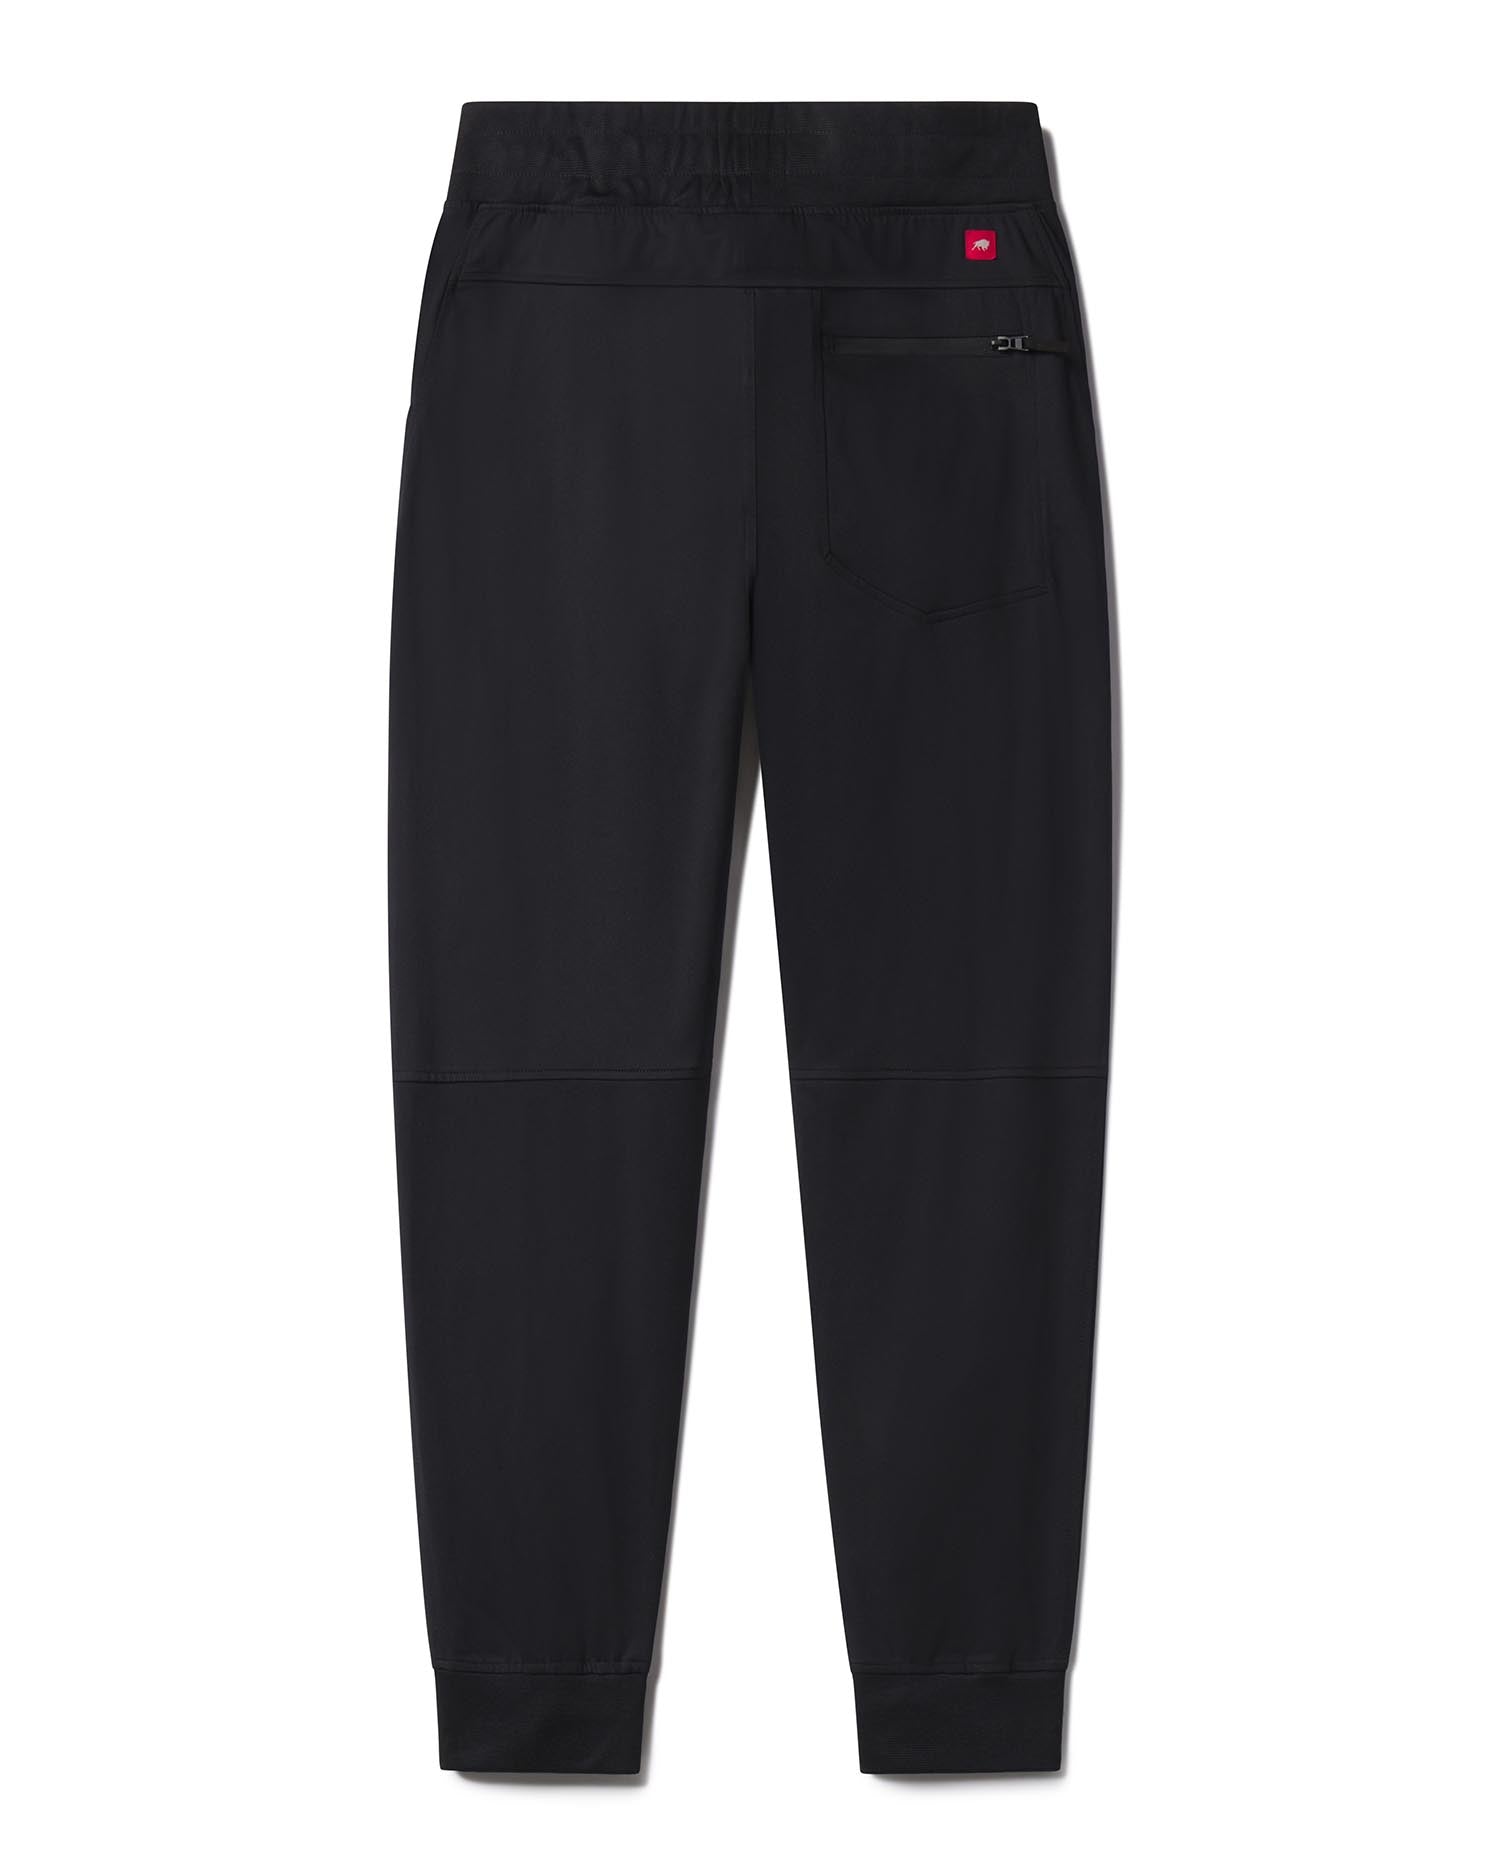 Men's Cotton Fleece Cargo Jogger Pants - All in Motion Black XL 1